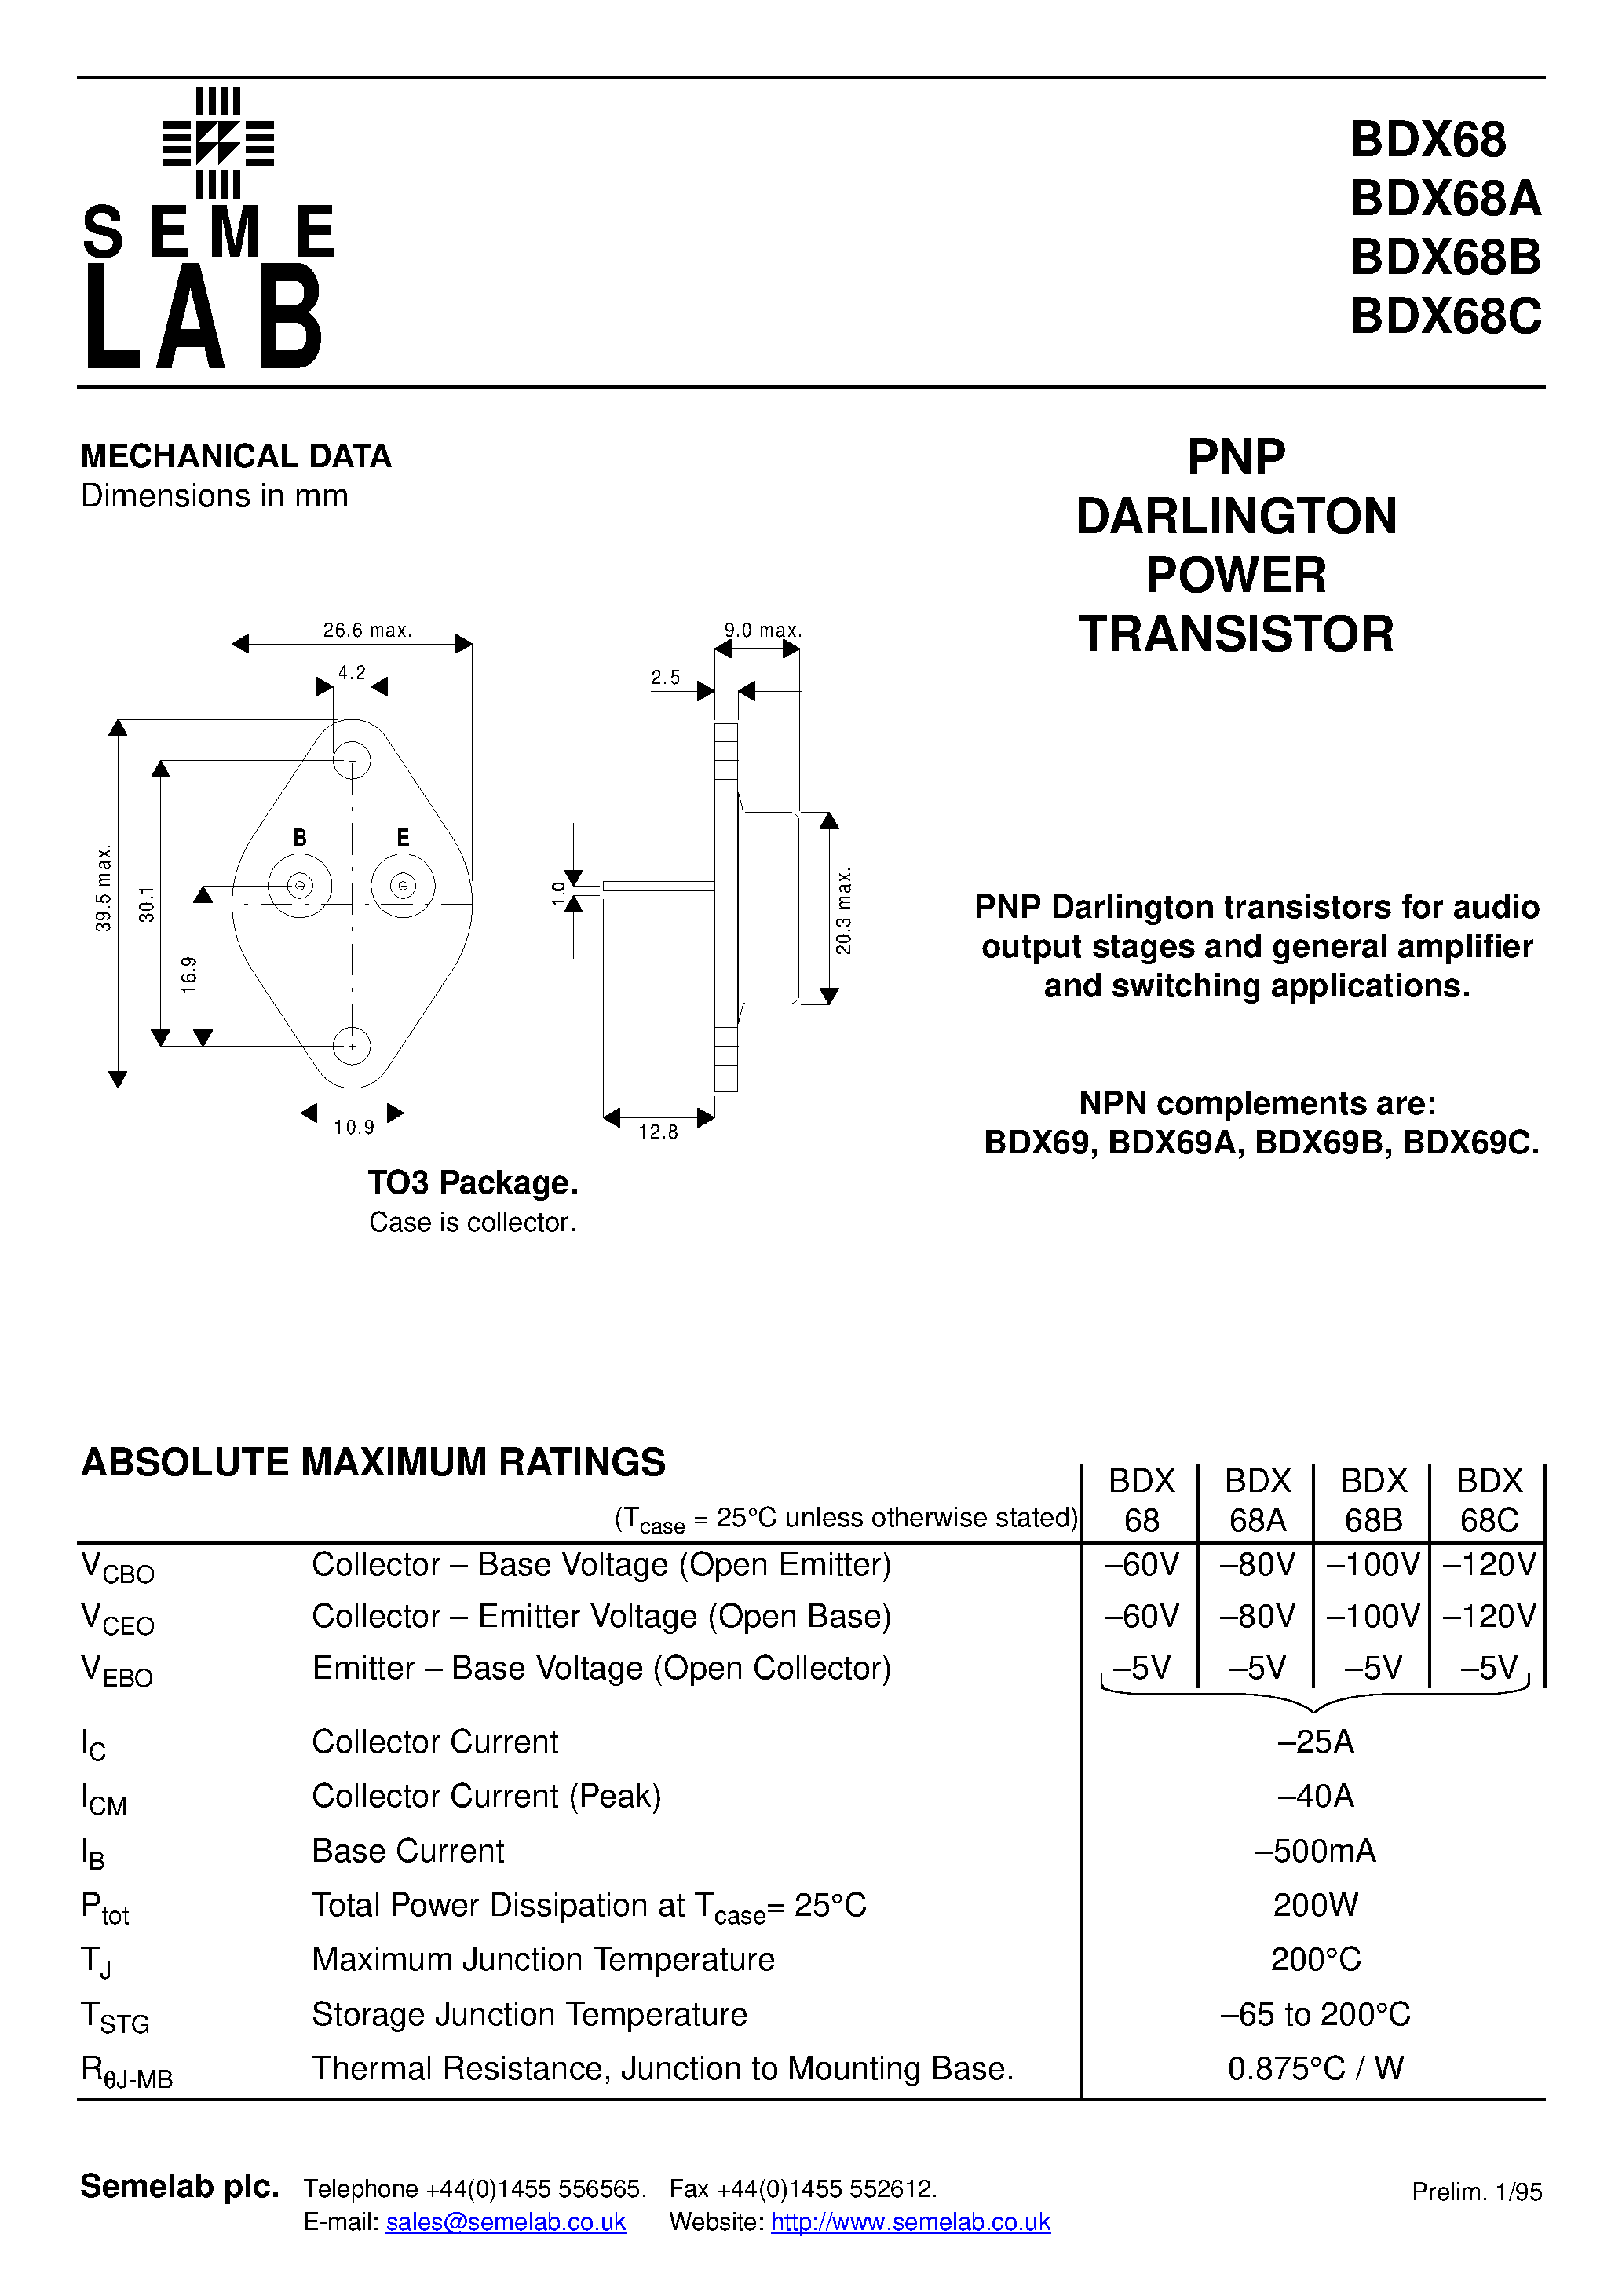 Datasheet BDX68 - PNP DARLINGTON POWER TRANSISTOR page 1